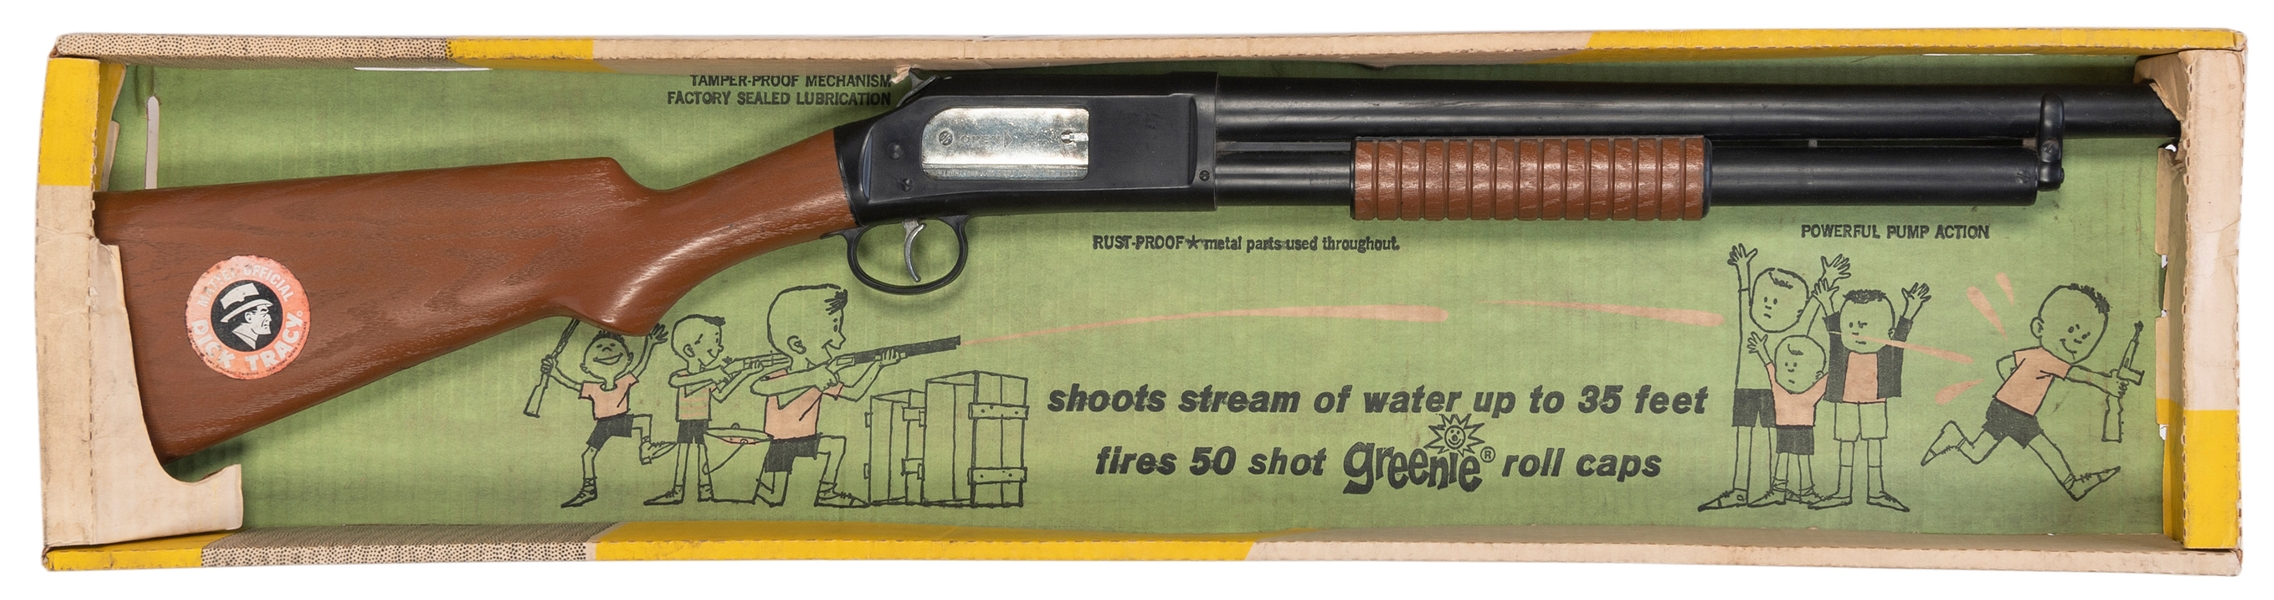  Mattel Dick Tracy Power-Jet Squad Gun (Rifle). Mattel, 1962...